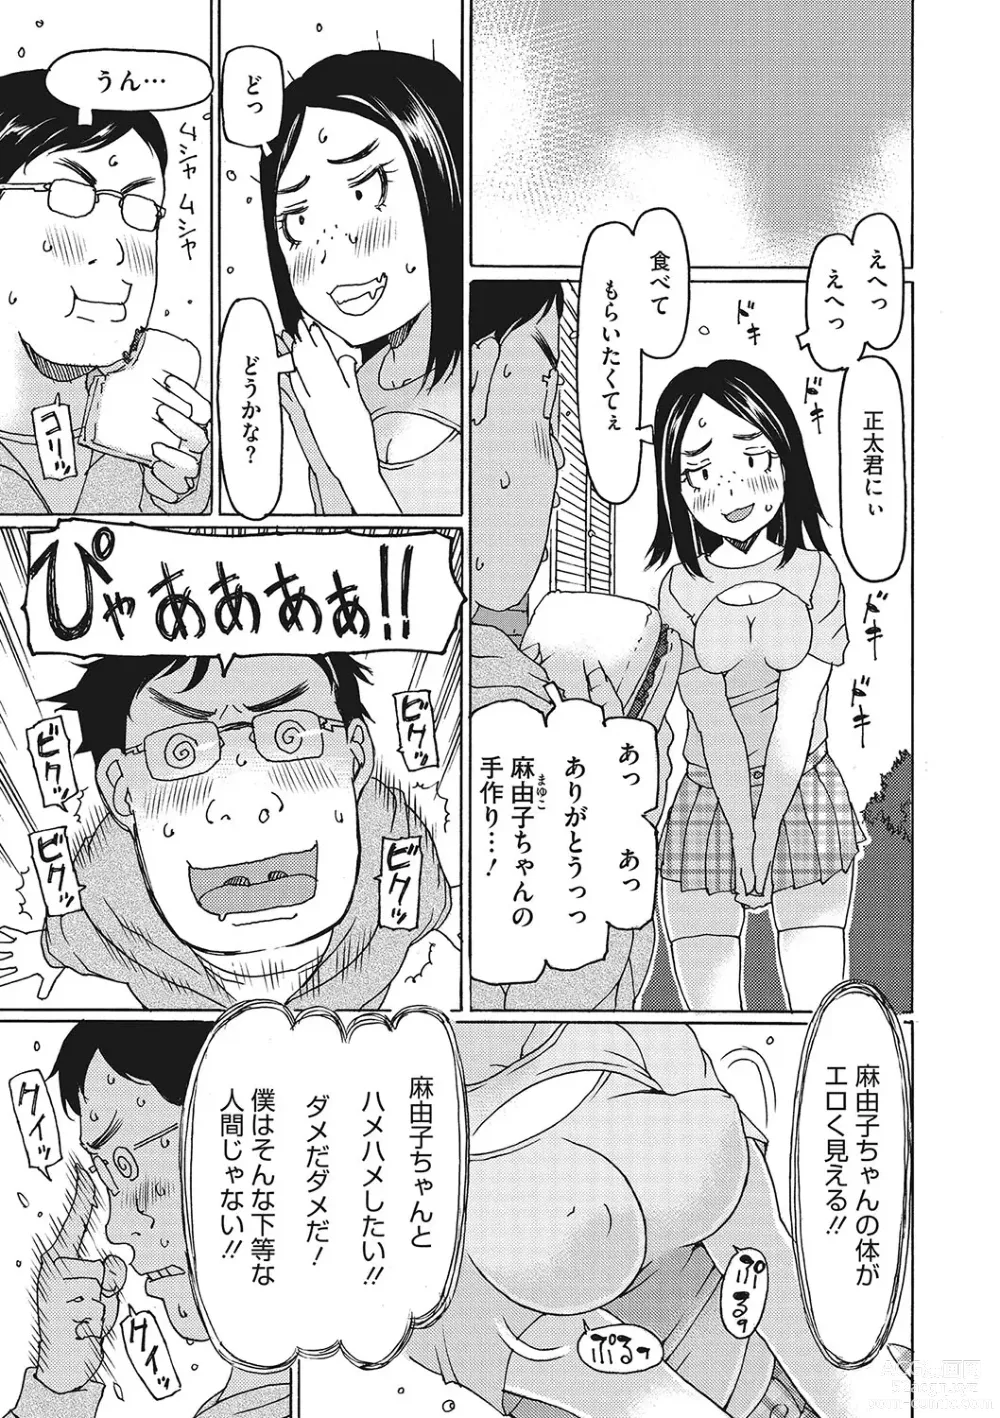 Page 6 of manga Little Girl Strike Vol. 29